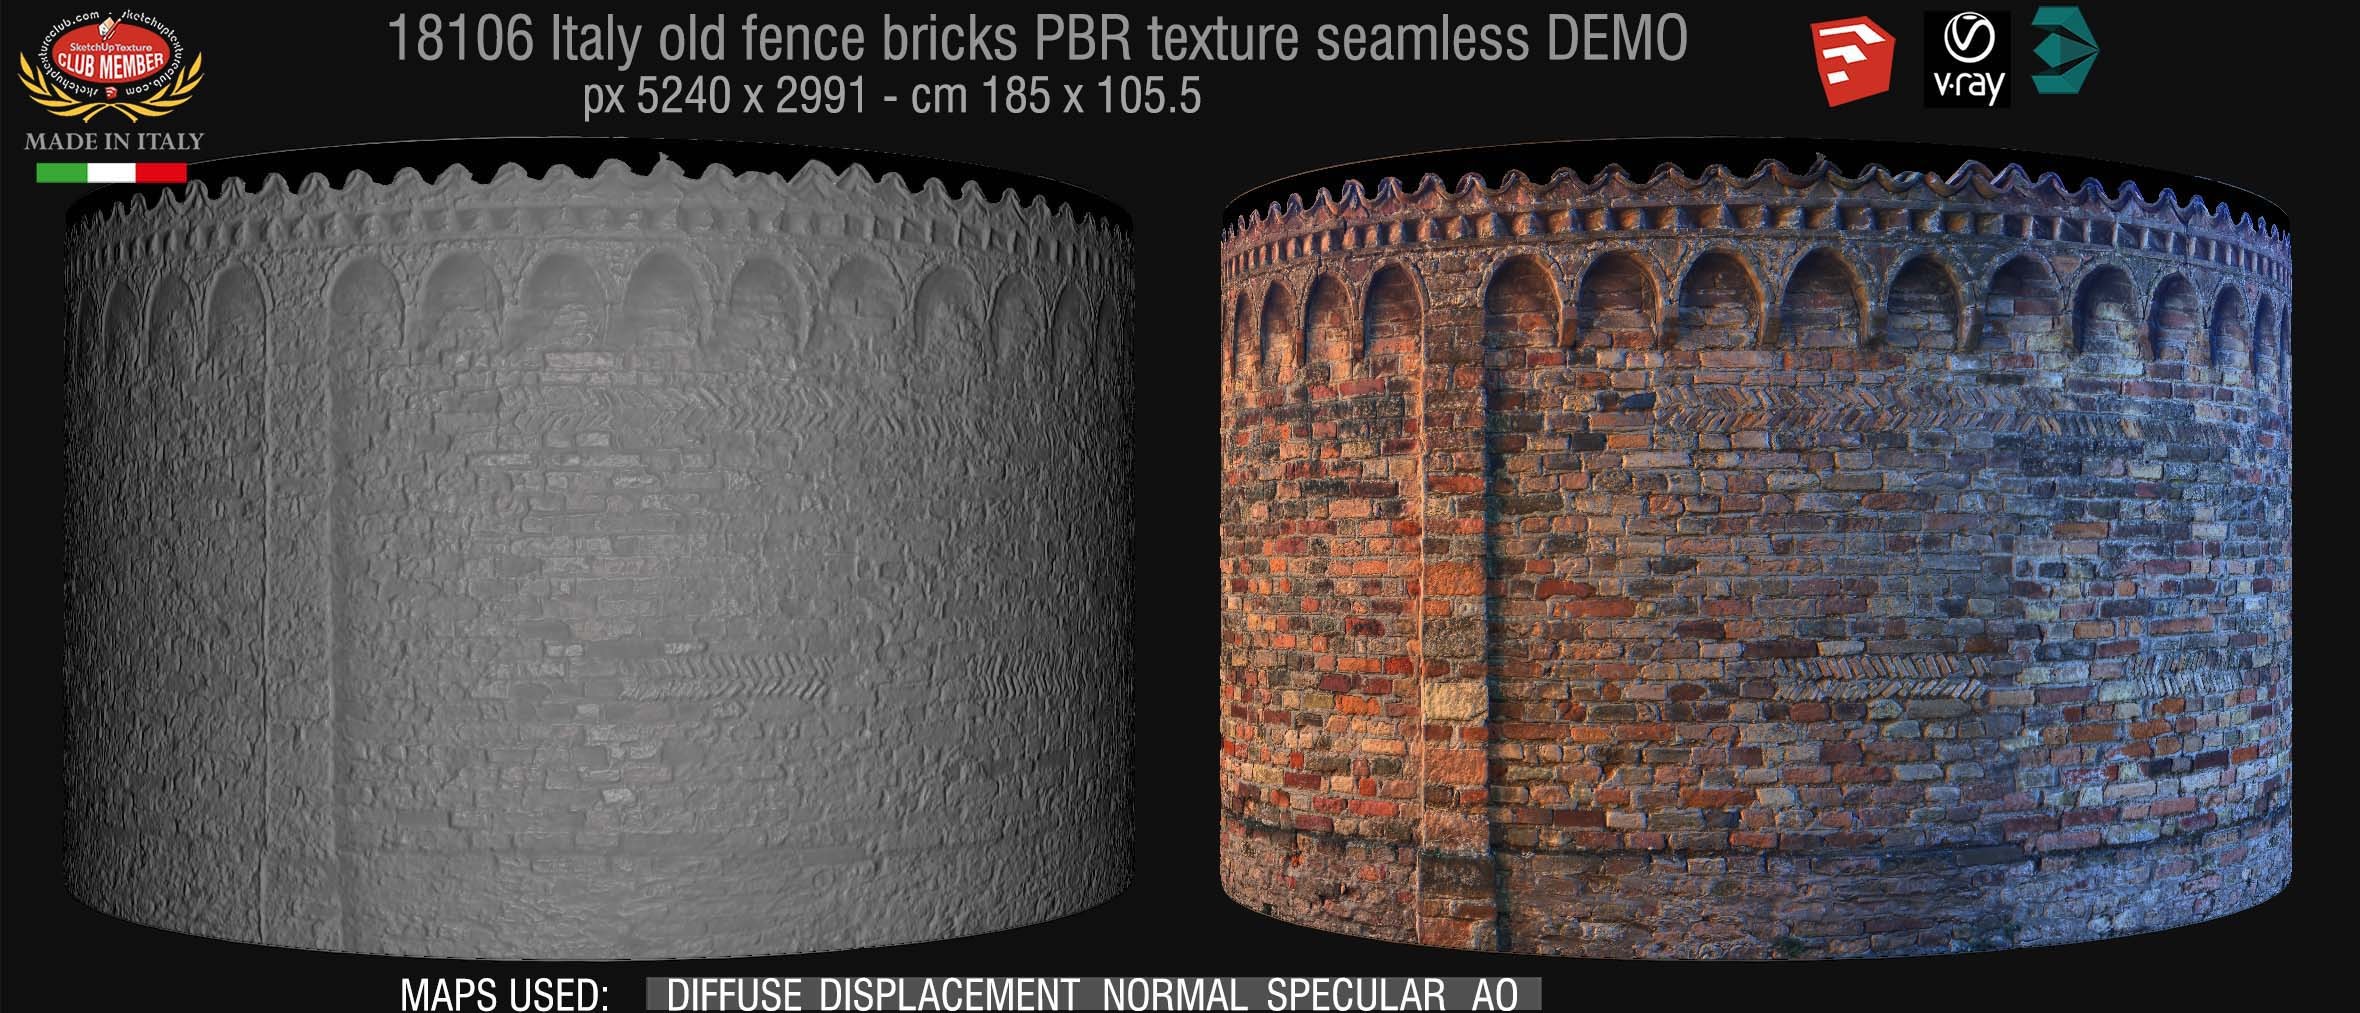 18106 Italy old fence bricks PBR texture seamless DEMO